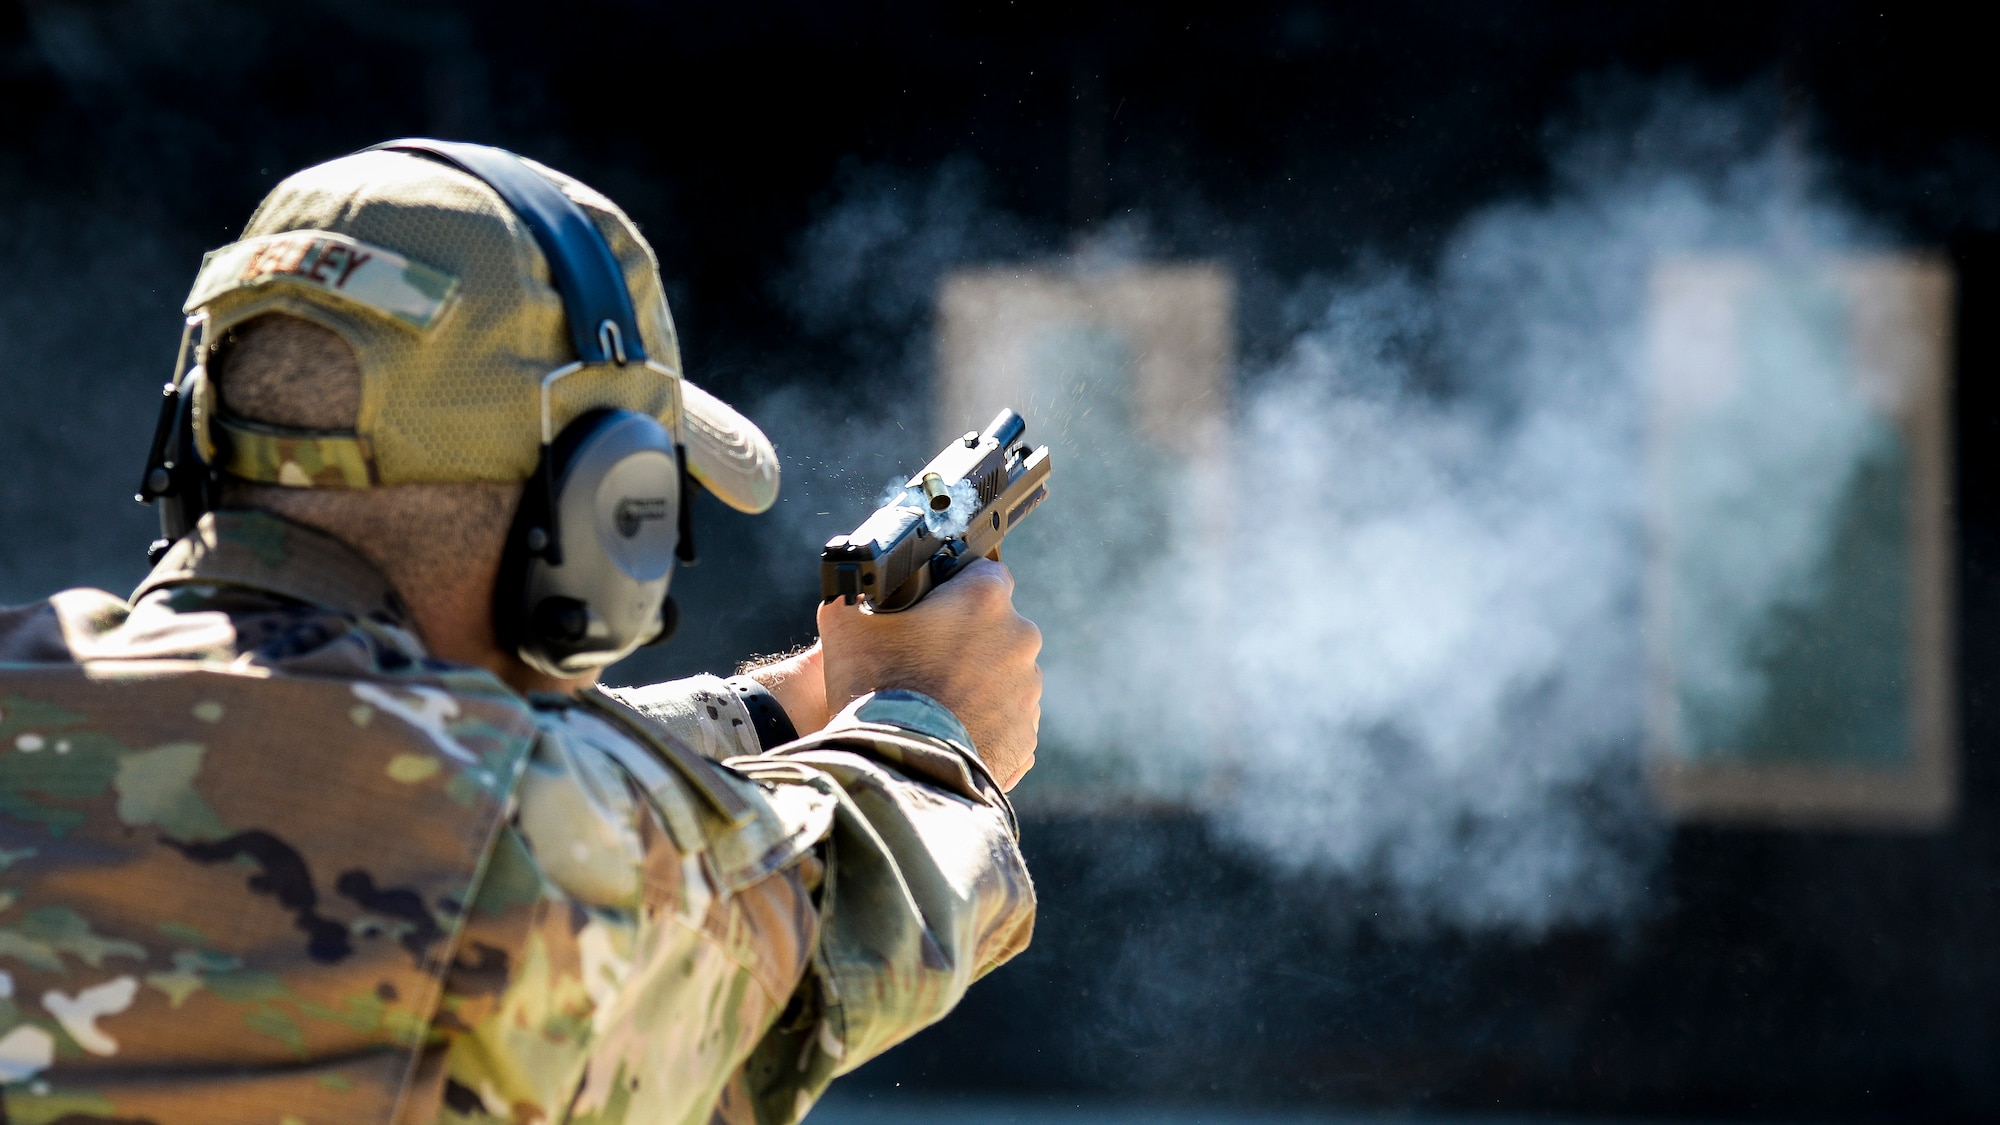 Senior Master Sgt. Justin Kelley, 177th Operations Squadron C2 operations senior enlisted leader, fires a SIG Sauer P320-M18 handgun